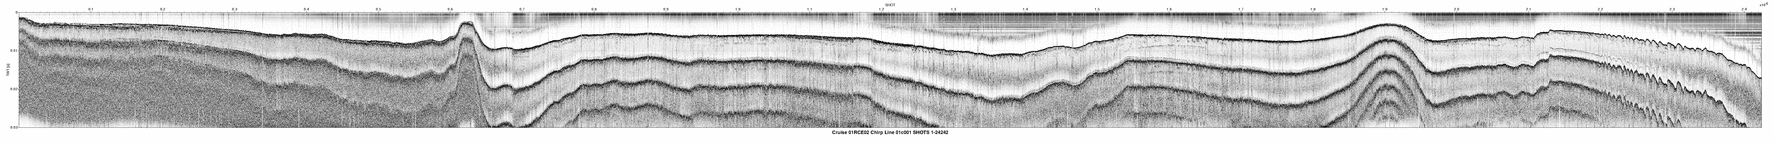 01RCE02 01c001 seismic profile image thumbnail